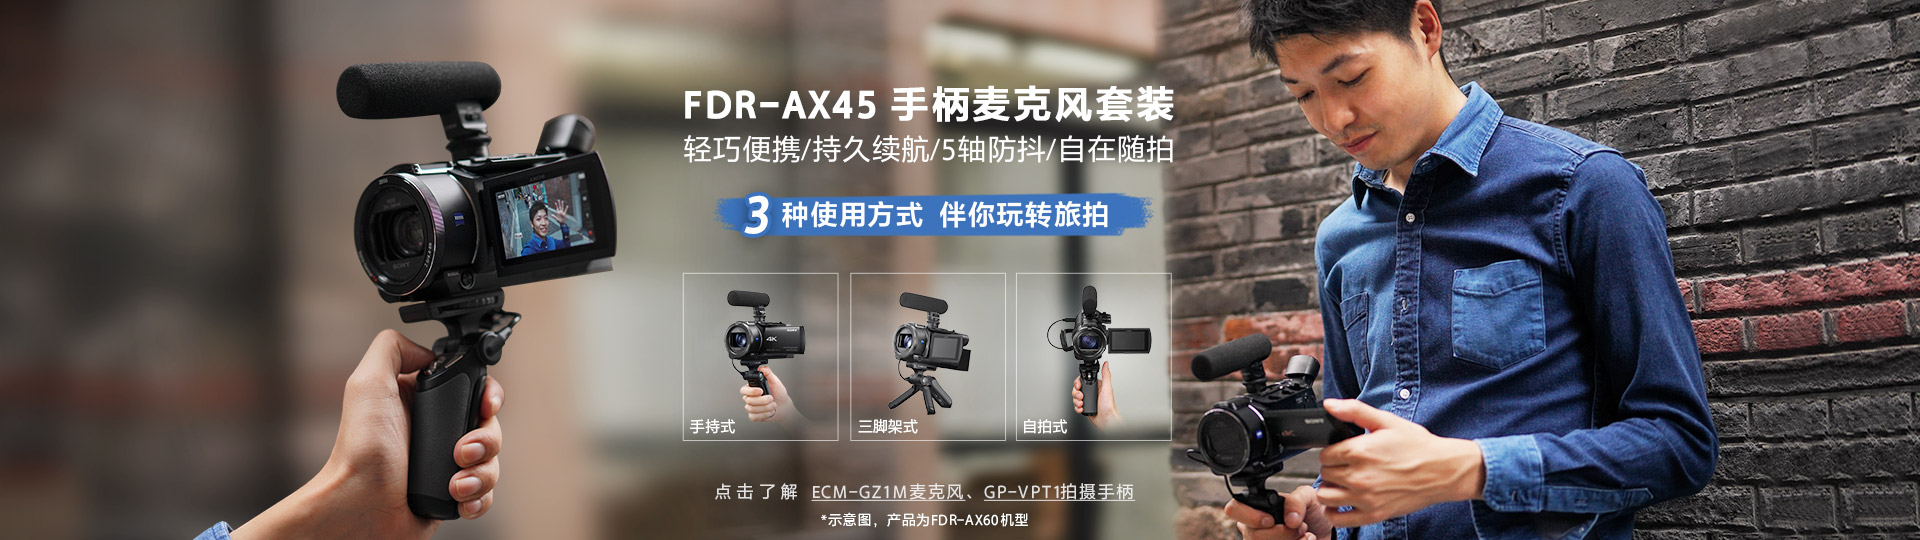 AX45手柄麦克风套装三种使用用方式展示